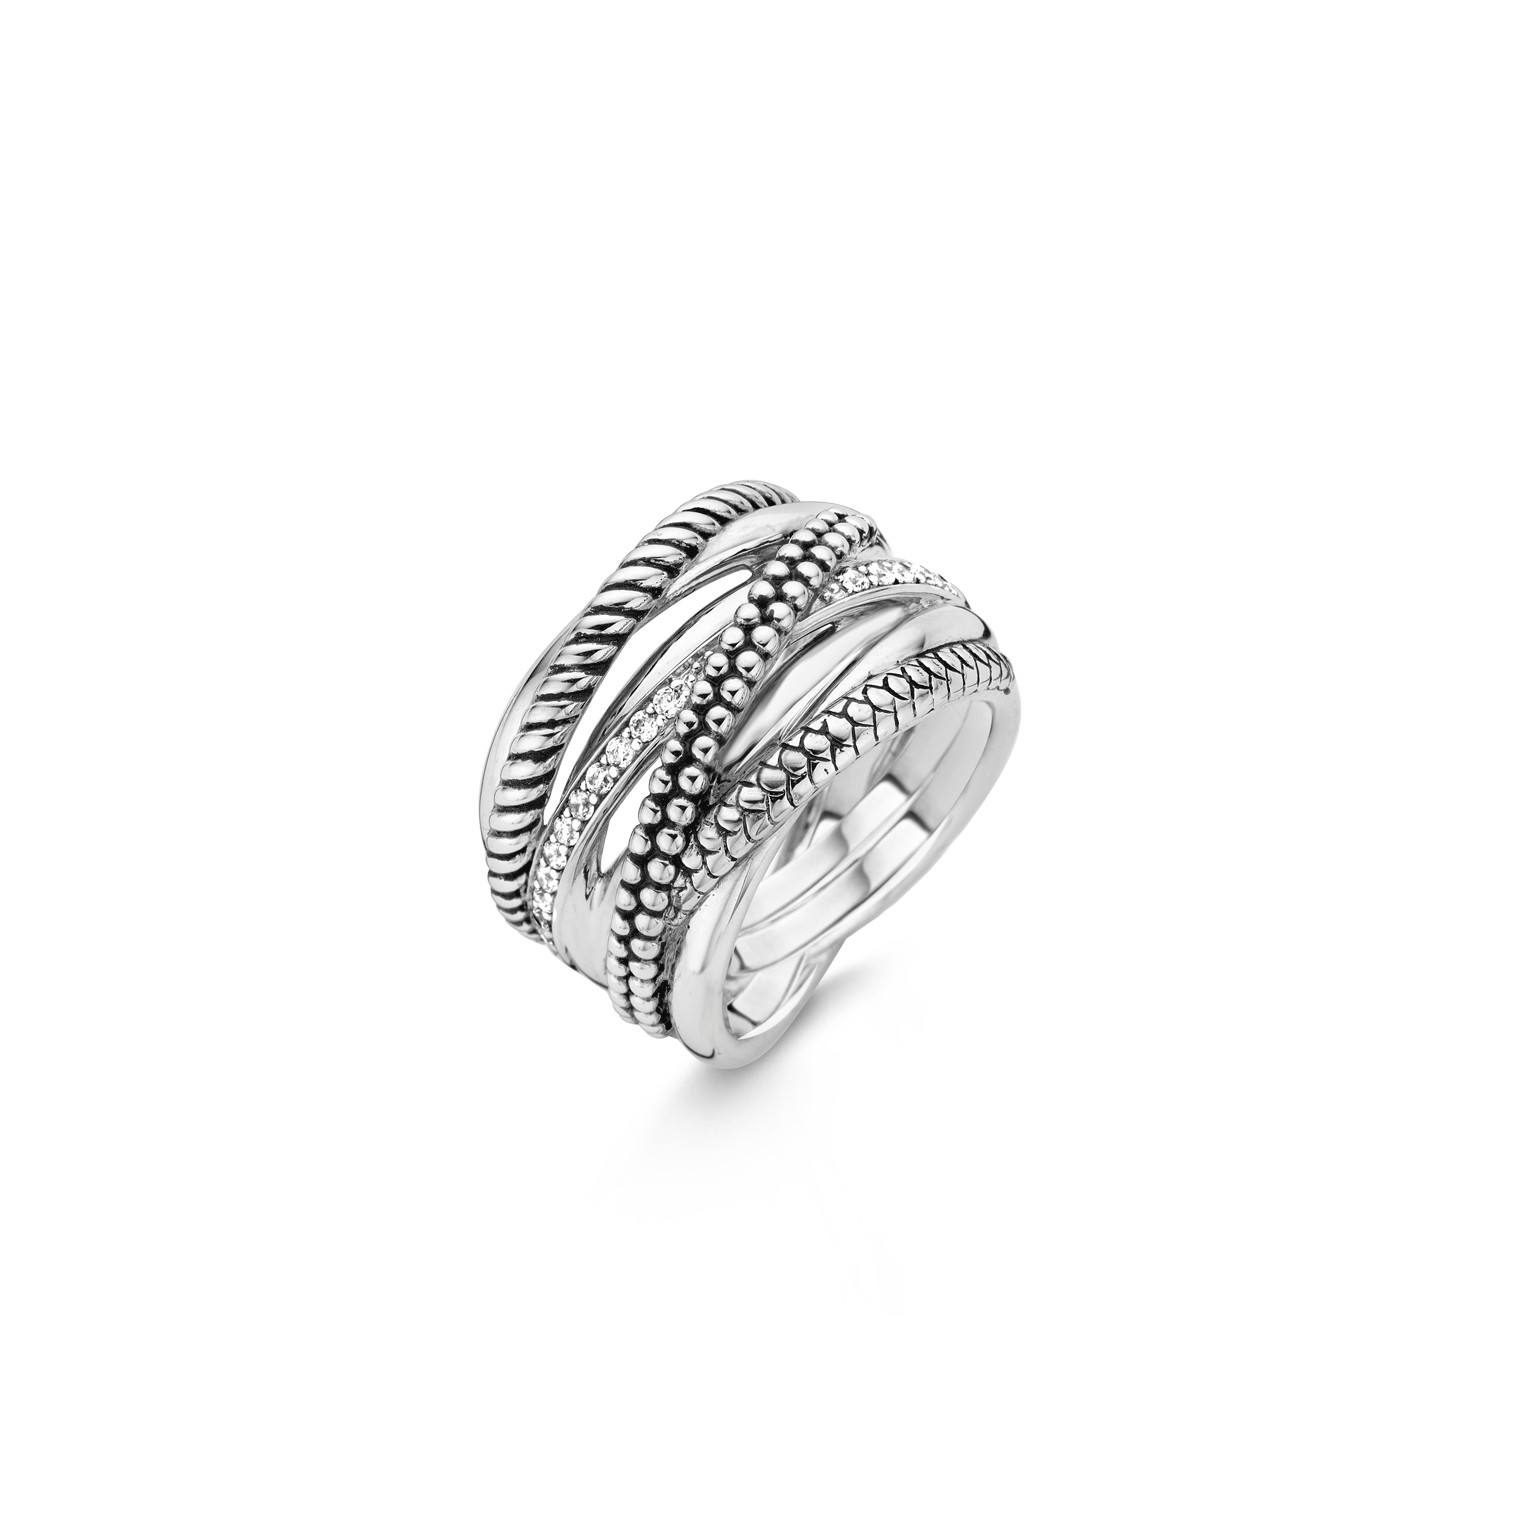 TI SENTO - Milano Ring 12066ZI Gala Jewelers Inc. White Oak, PA